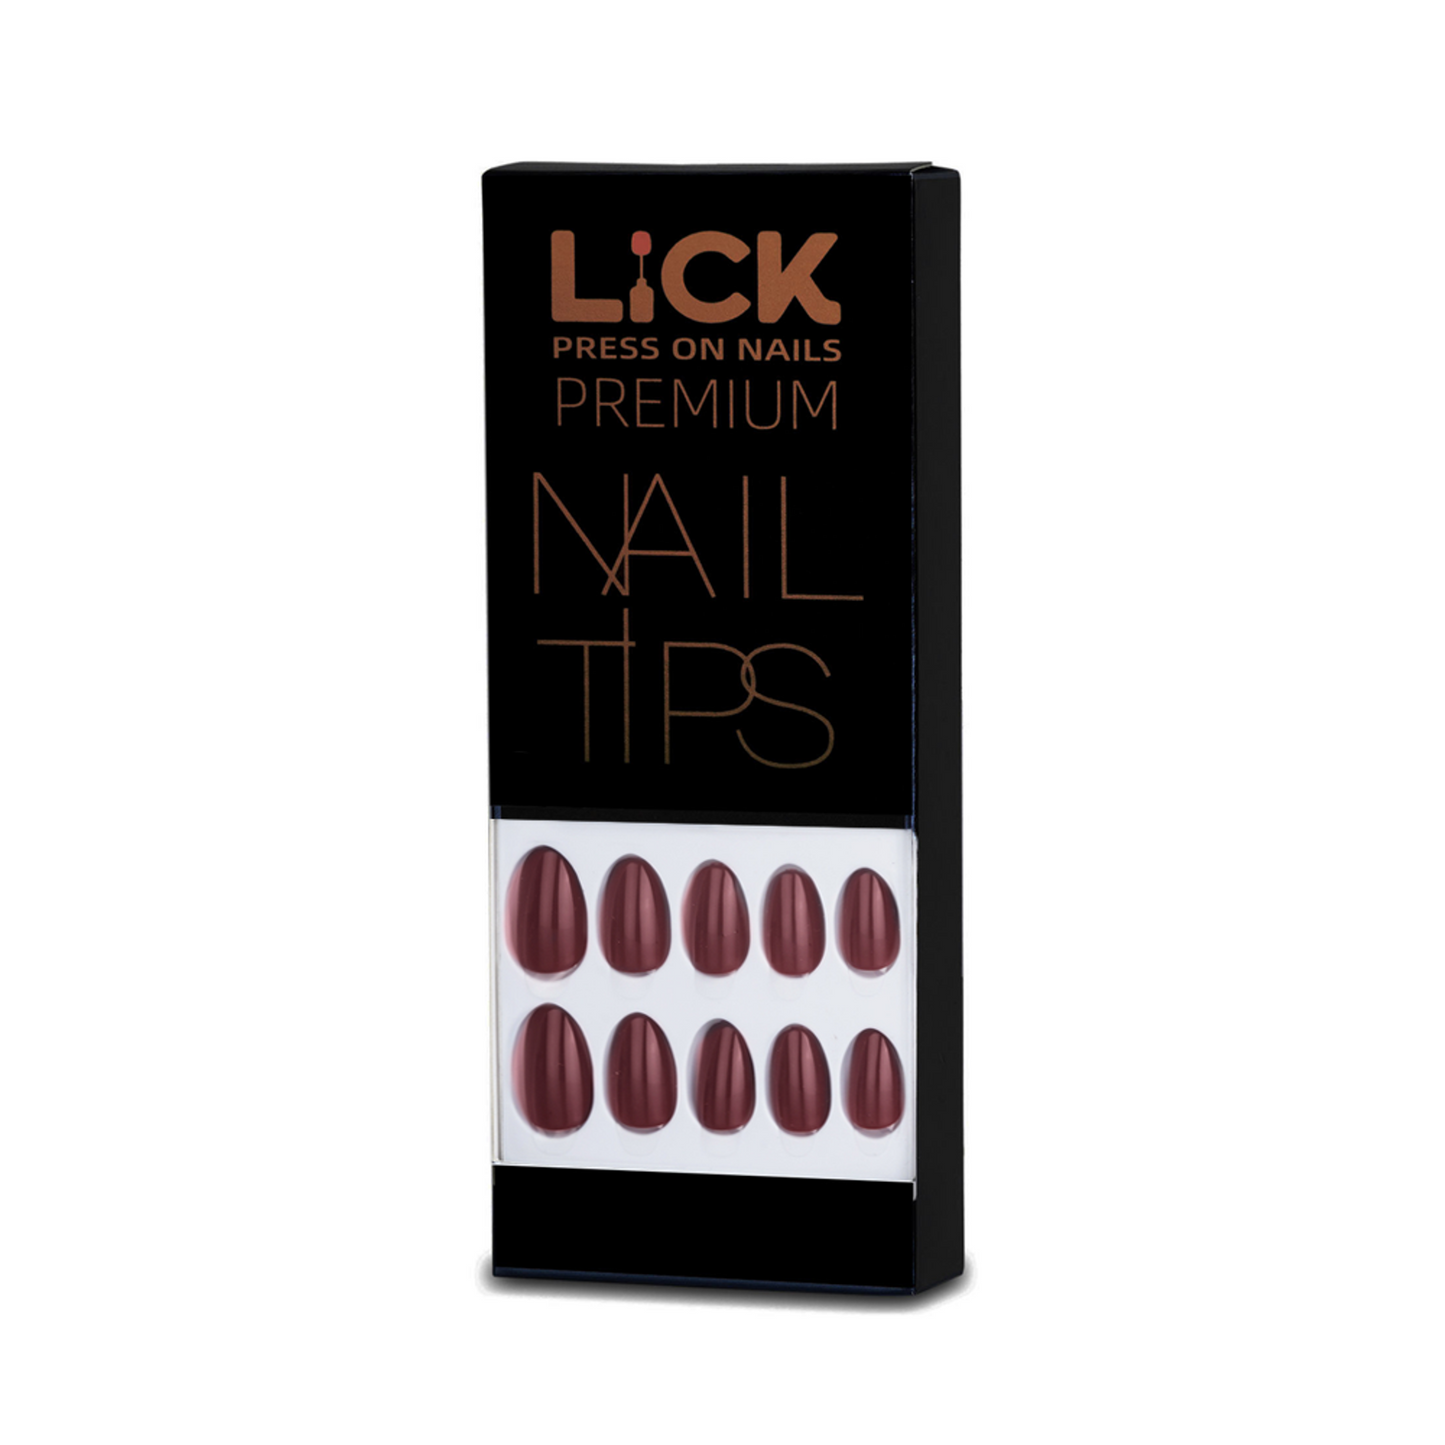 LICK NAILS Oval Shape Dark Maroon Press On Nails